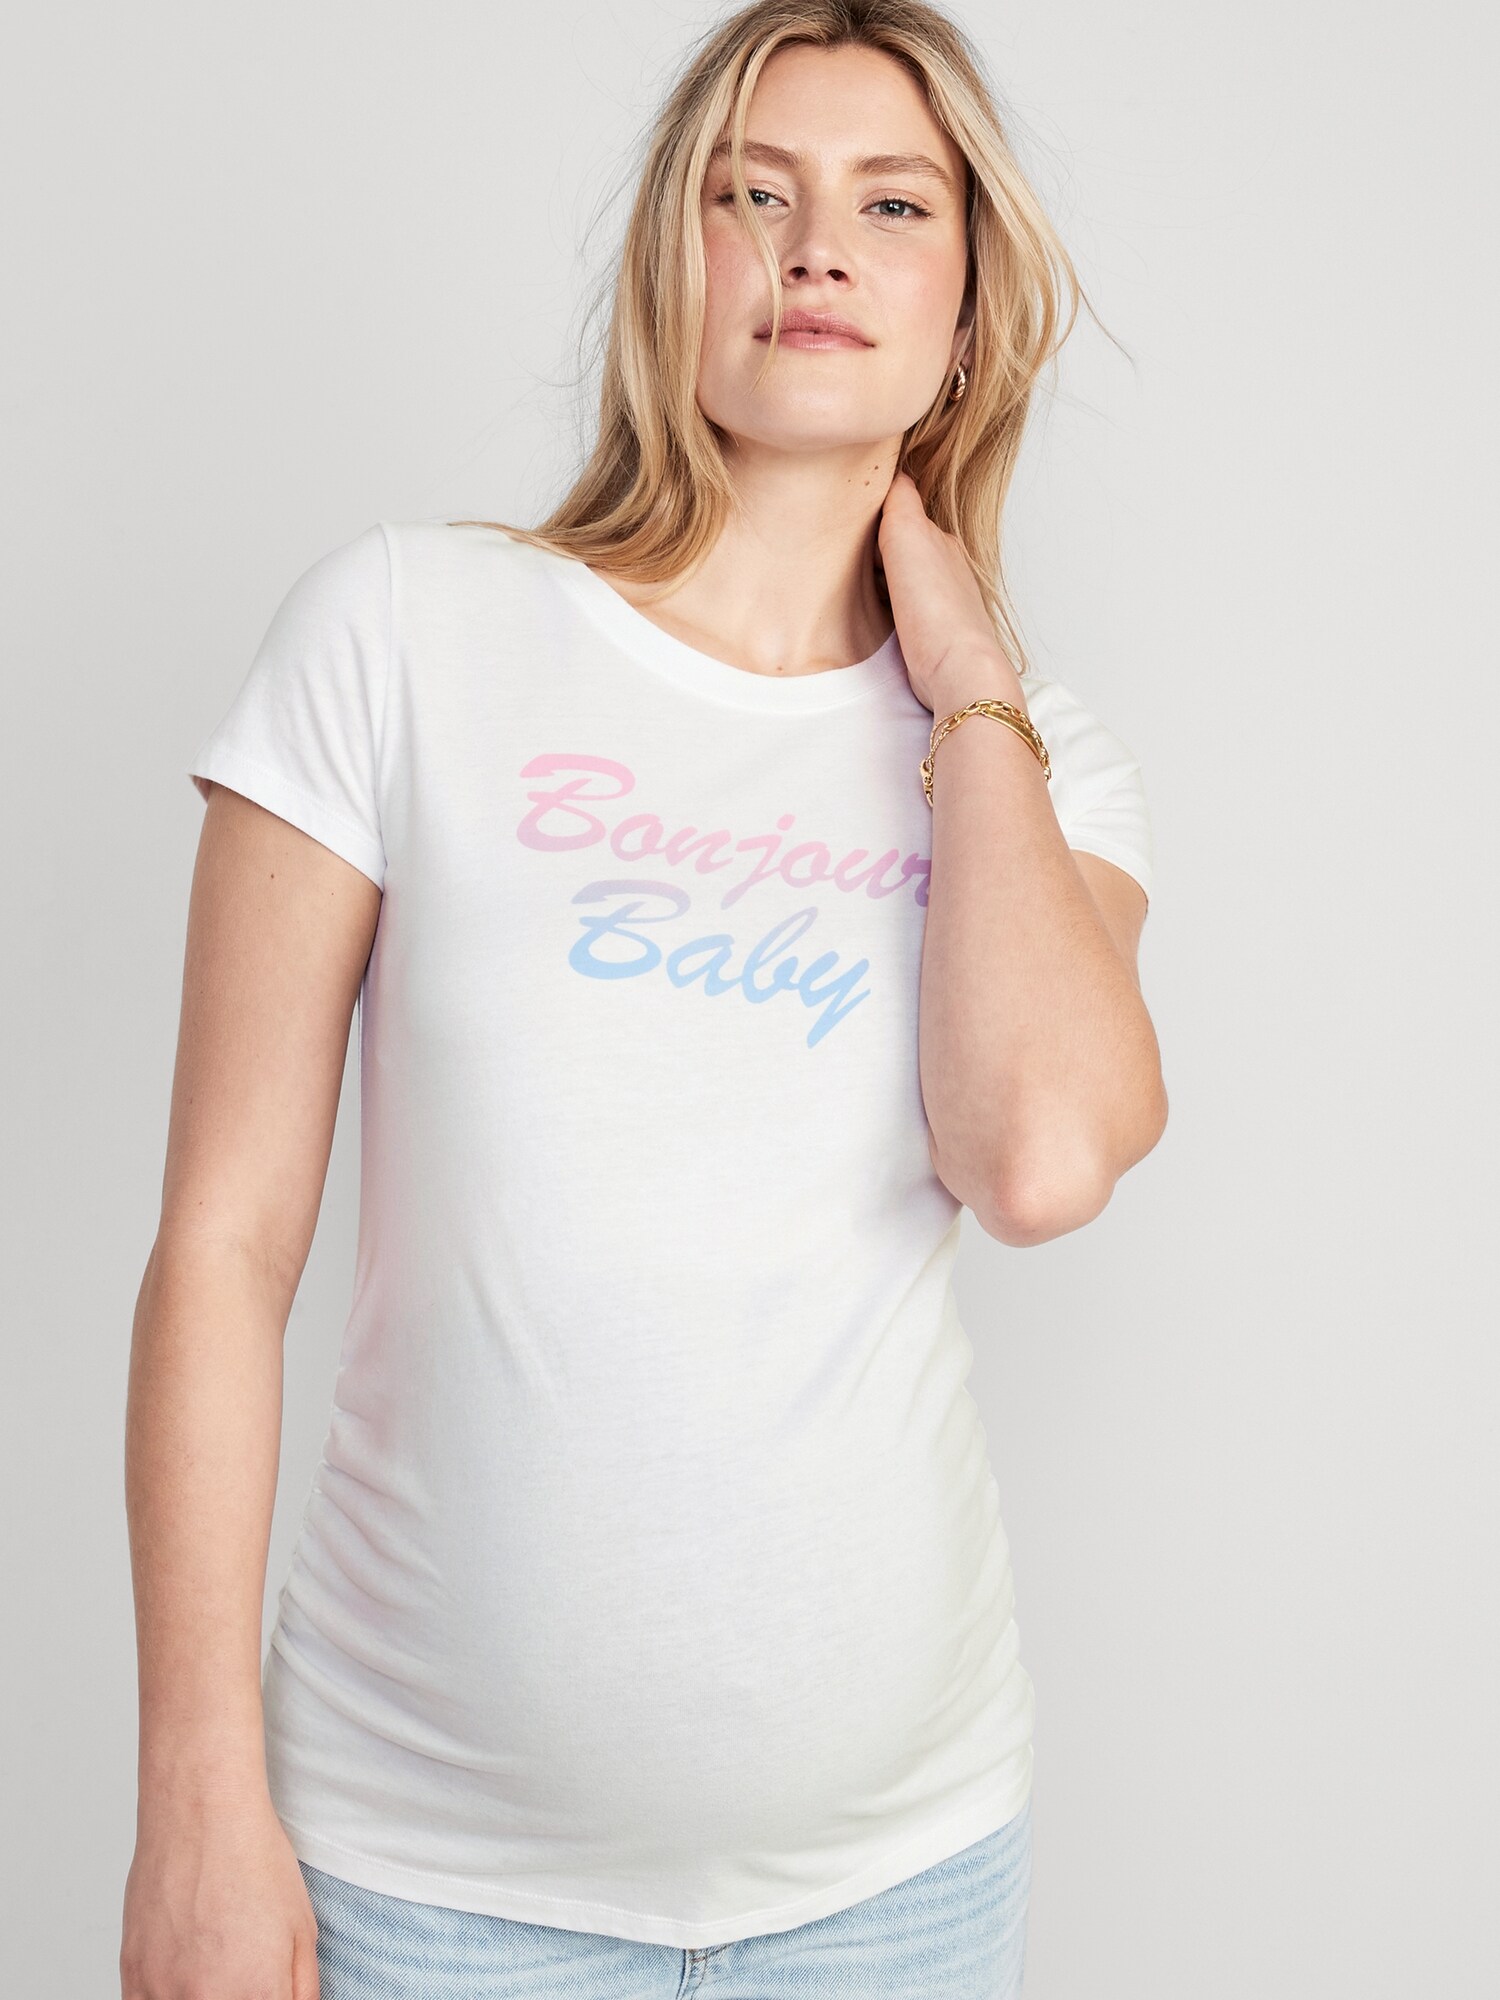 Pregnant AF Maternity Shirt - Pick Color – NobullWoman Apparel